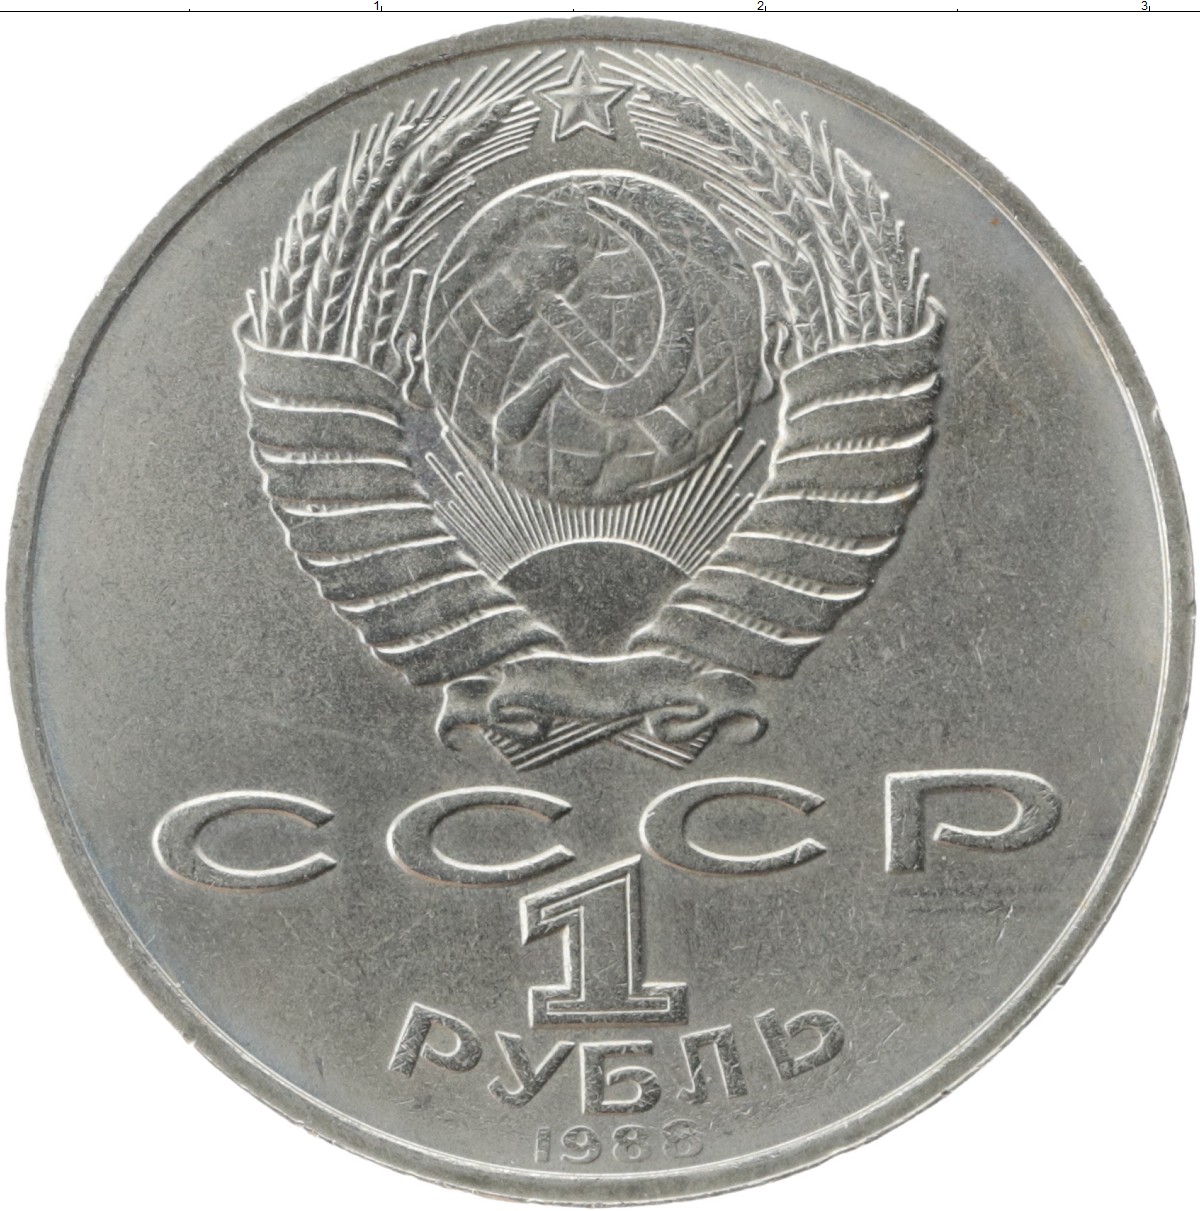 1 рубль 80 года. Монеты СССР. Юбилейные монеты СССР. Монеты СССР рубли. Юбилейные монеты 3 рубля.